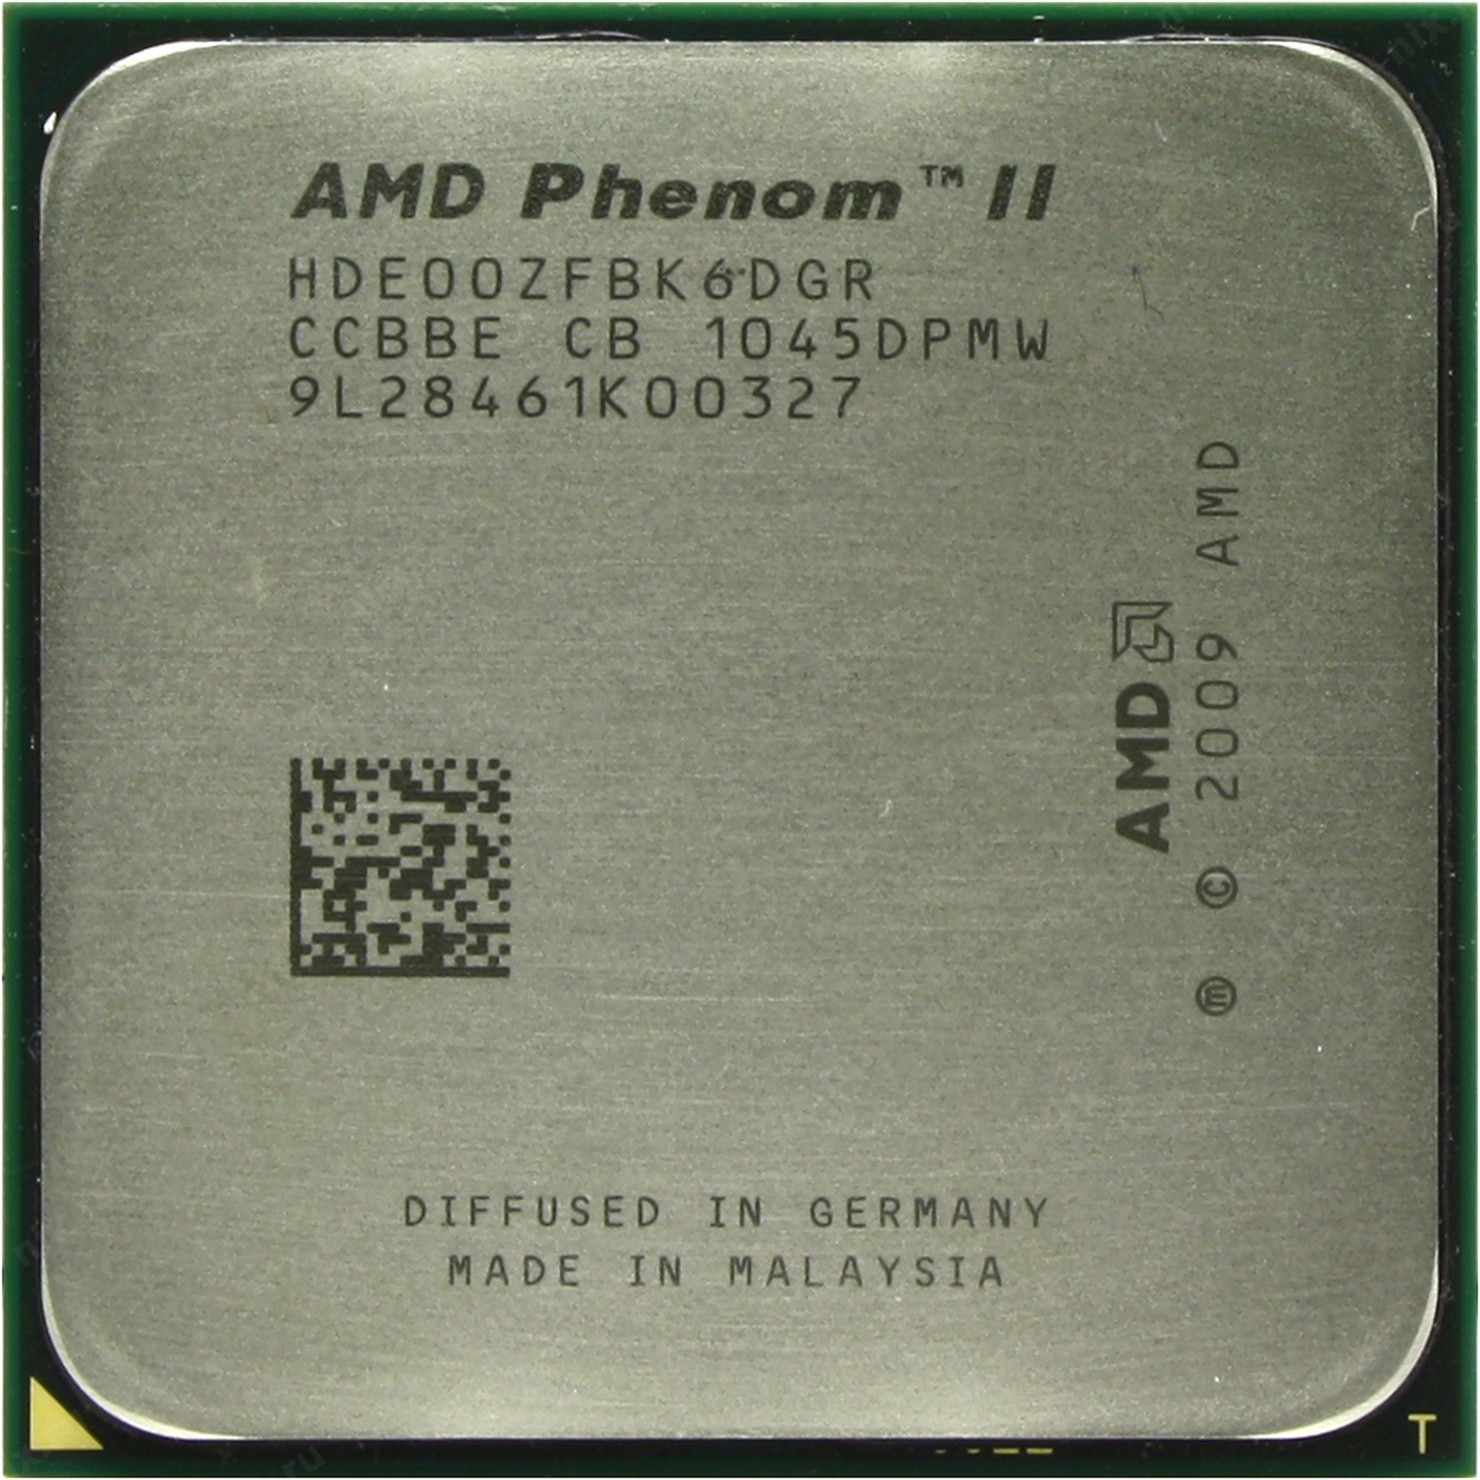 Phenom ii x6 характеристики. AMD Phenom II x6 1100t Black Edition. Phenom II x6 1100. Процессор AMD Phenom II x6 Black Thuban 1100t. Phenom II x6 1600t.